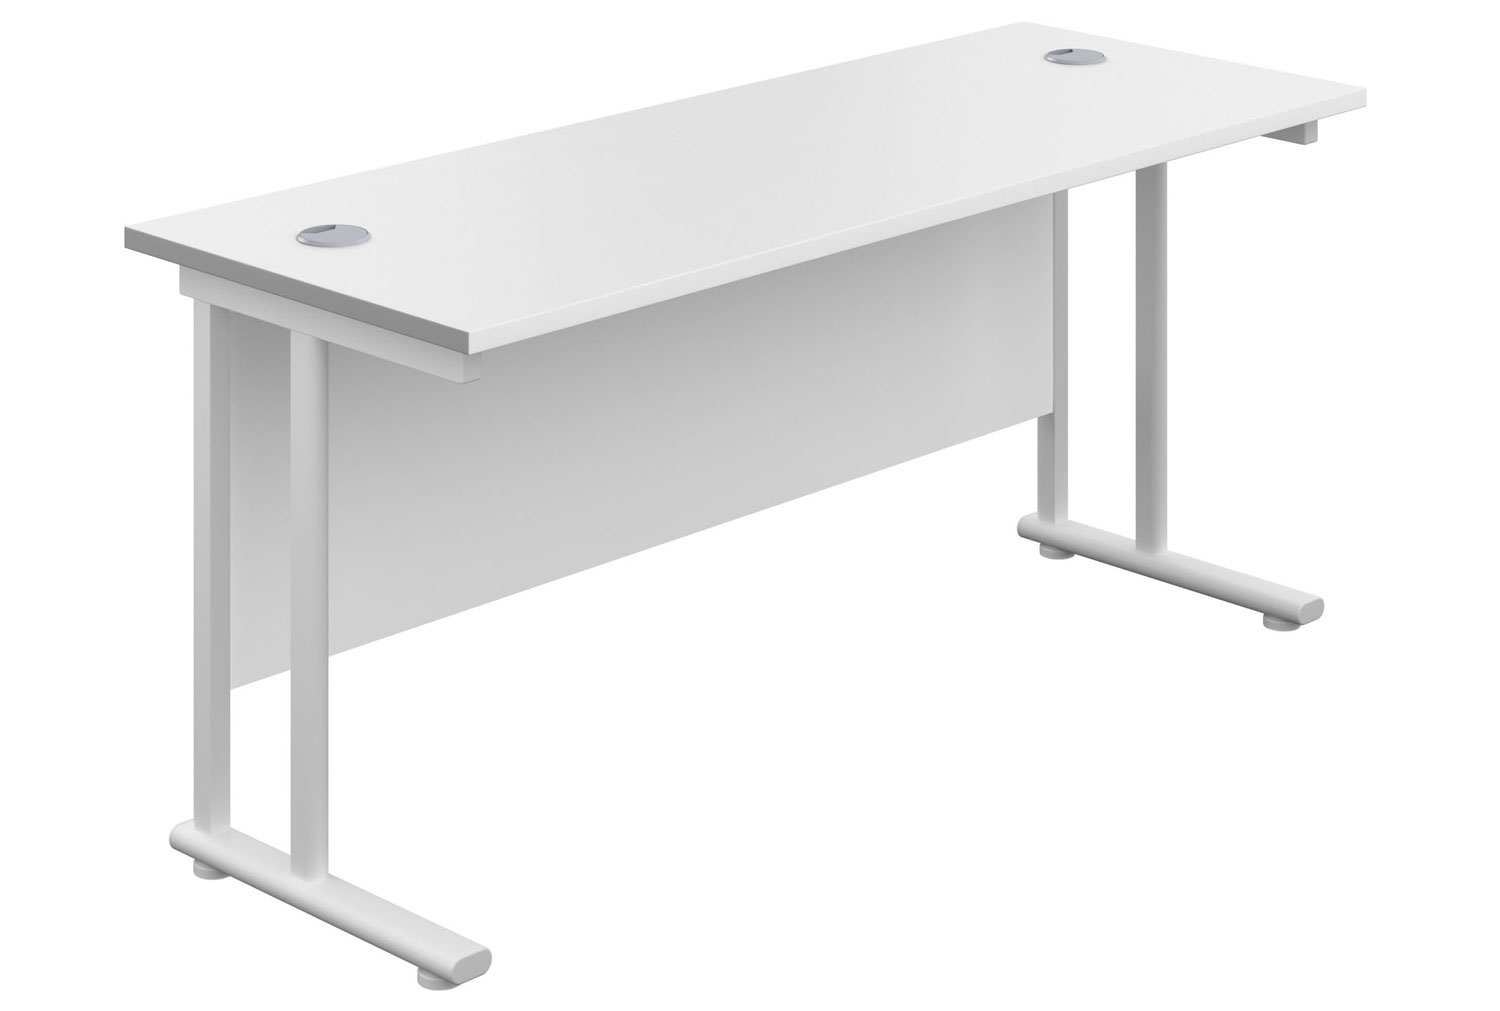 Impulse Narrow Rectangular Office Desk, 180wx60dx73h (cm), White Frame, White, Express Delivery